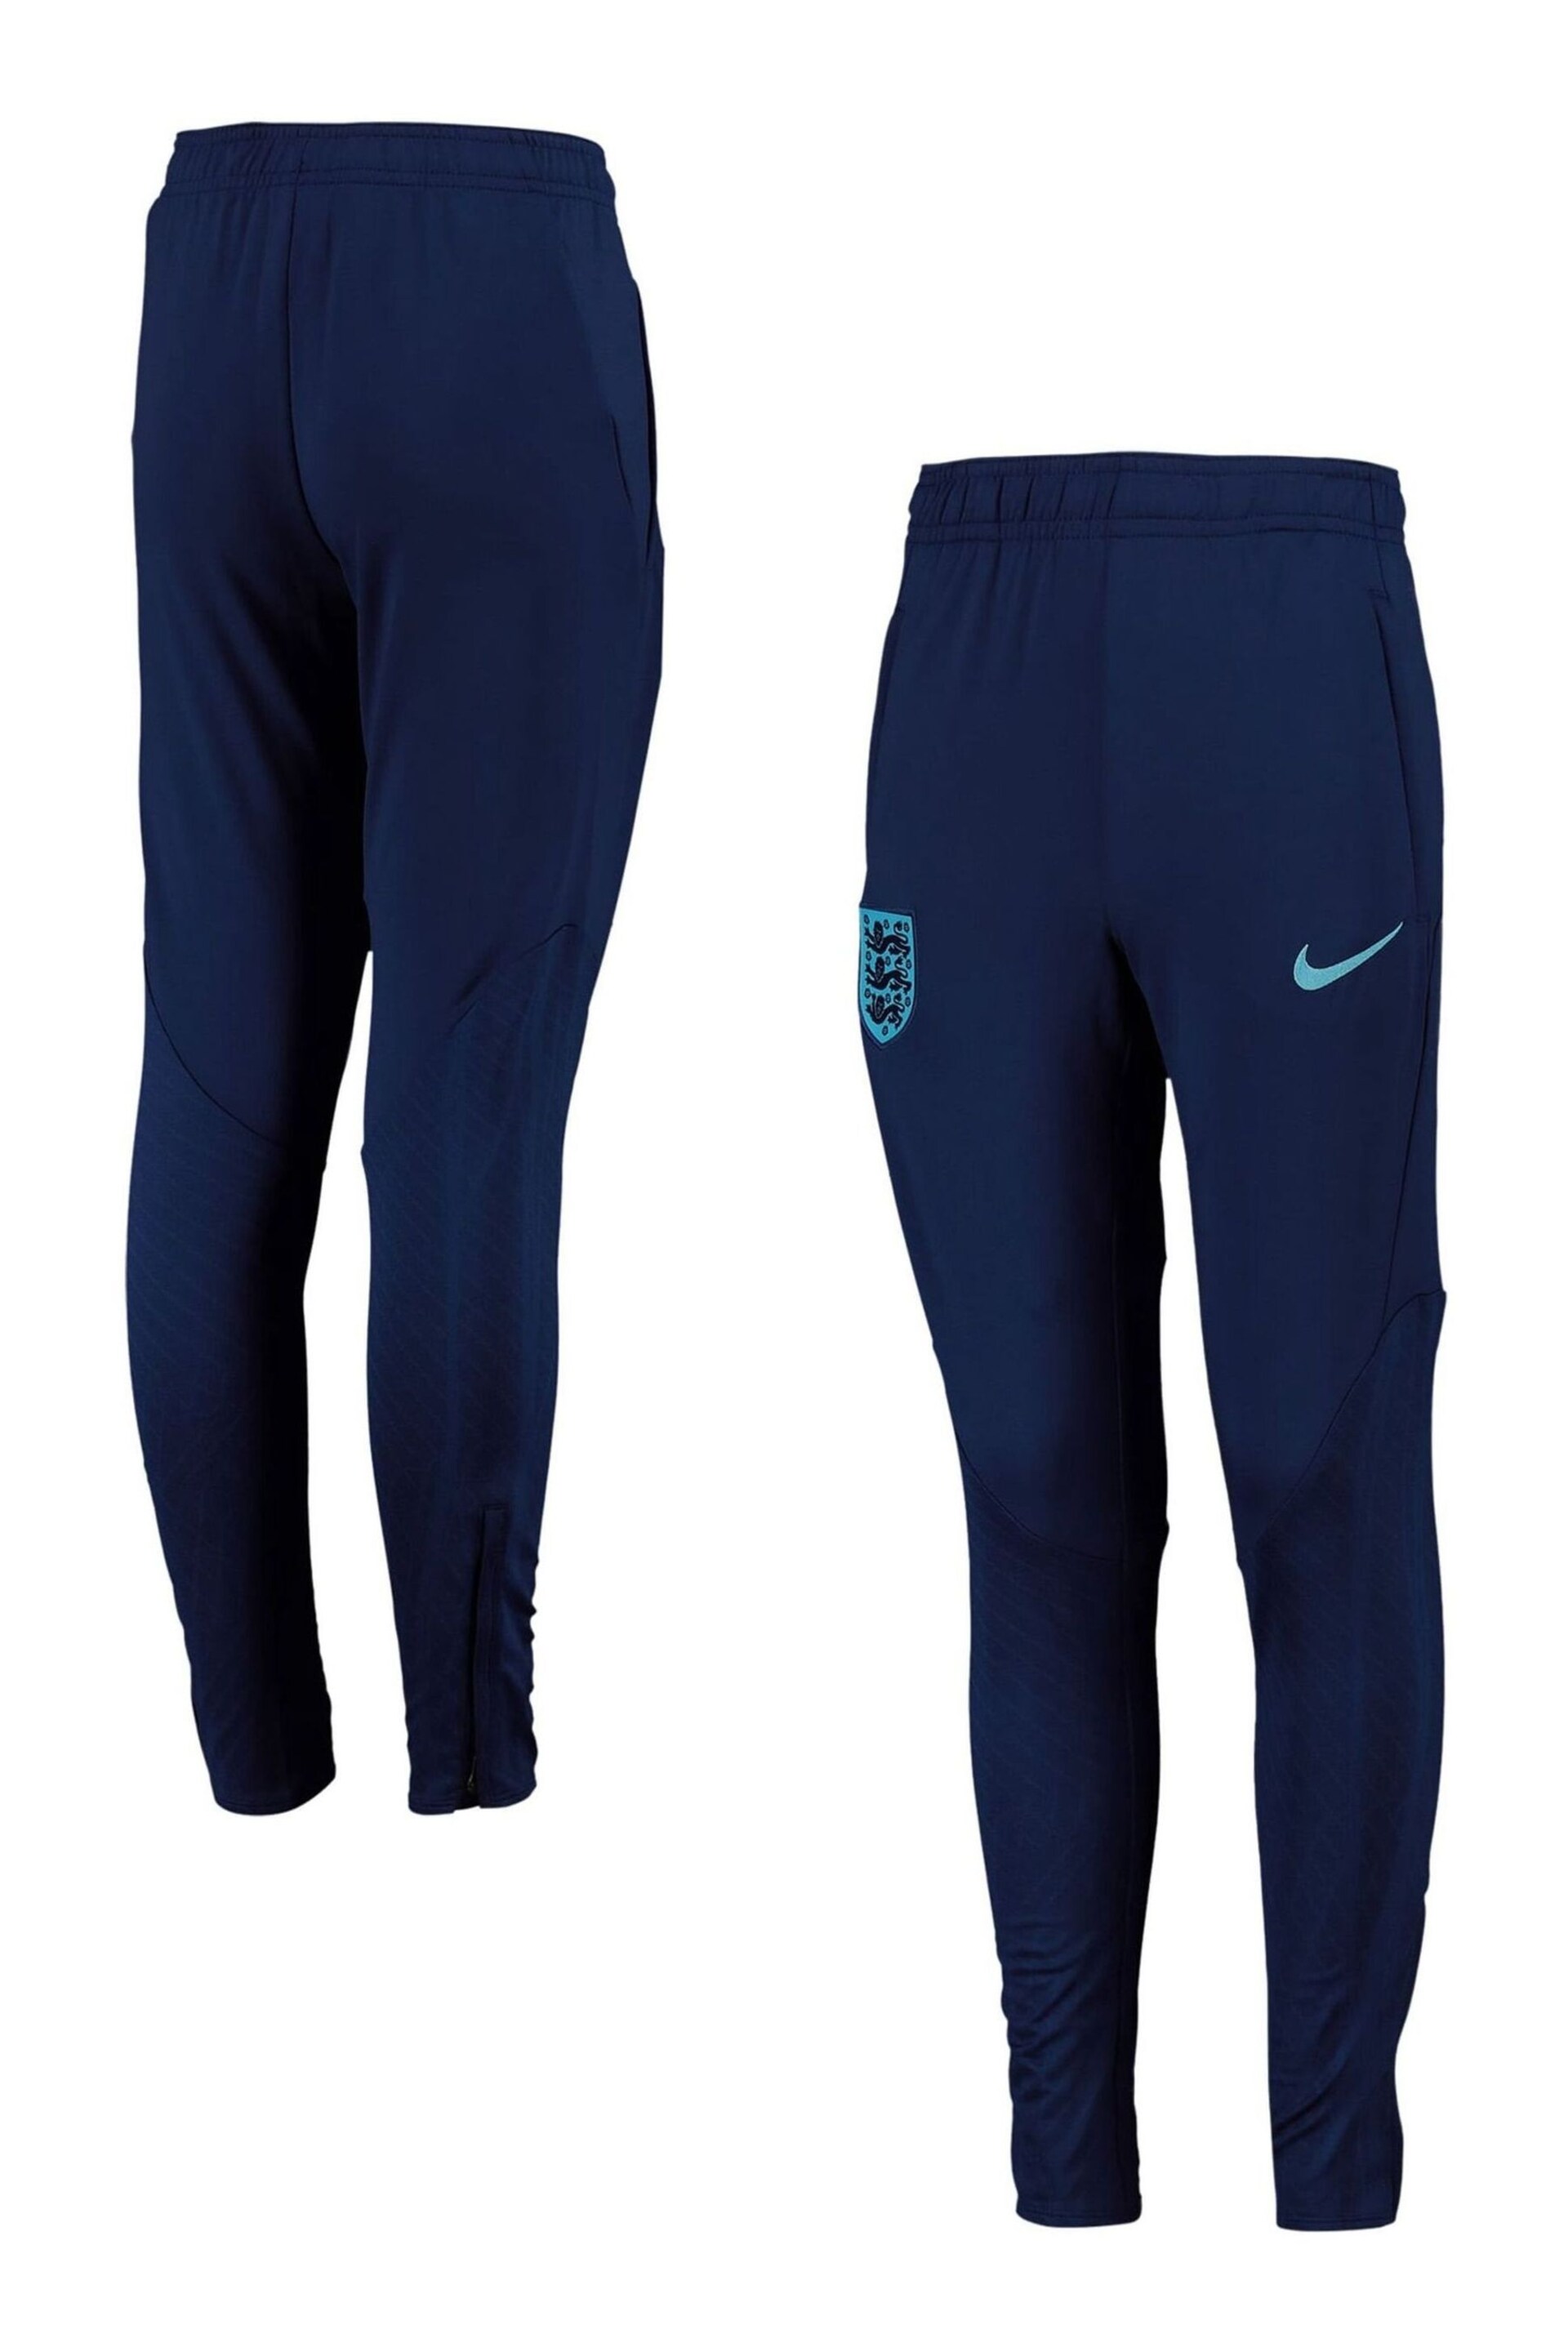 Nike Blue England Strike Joggers - Image 1 of 3